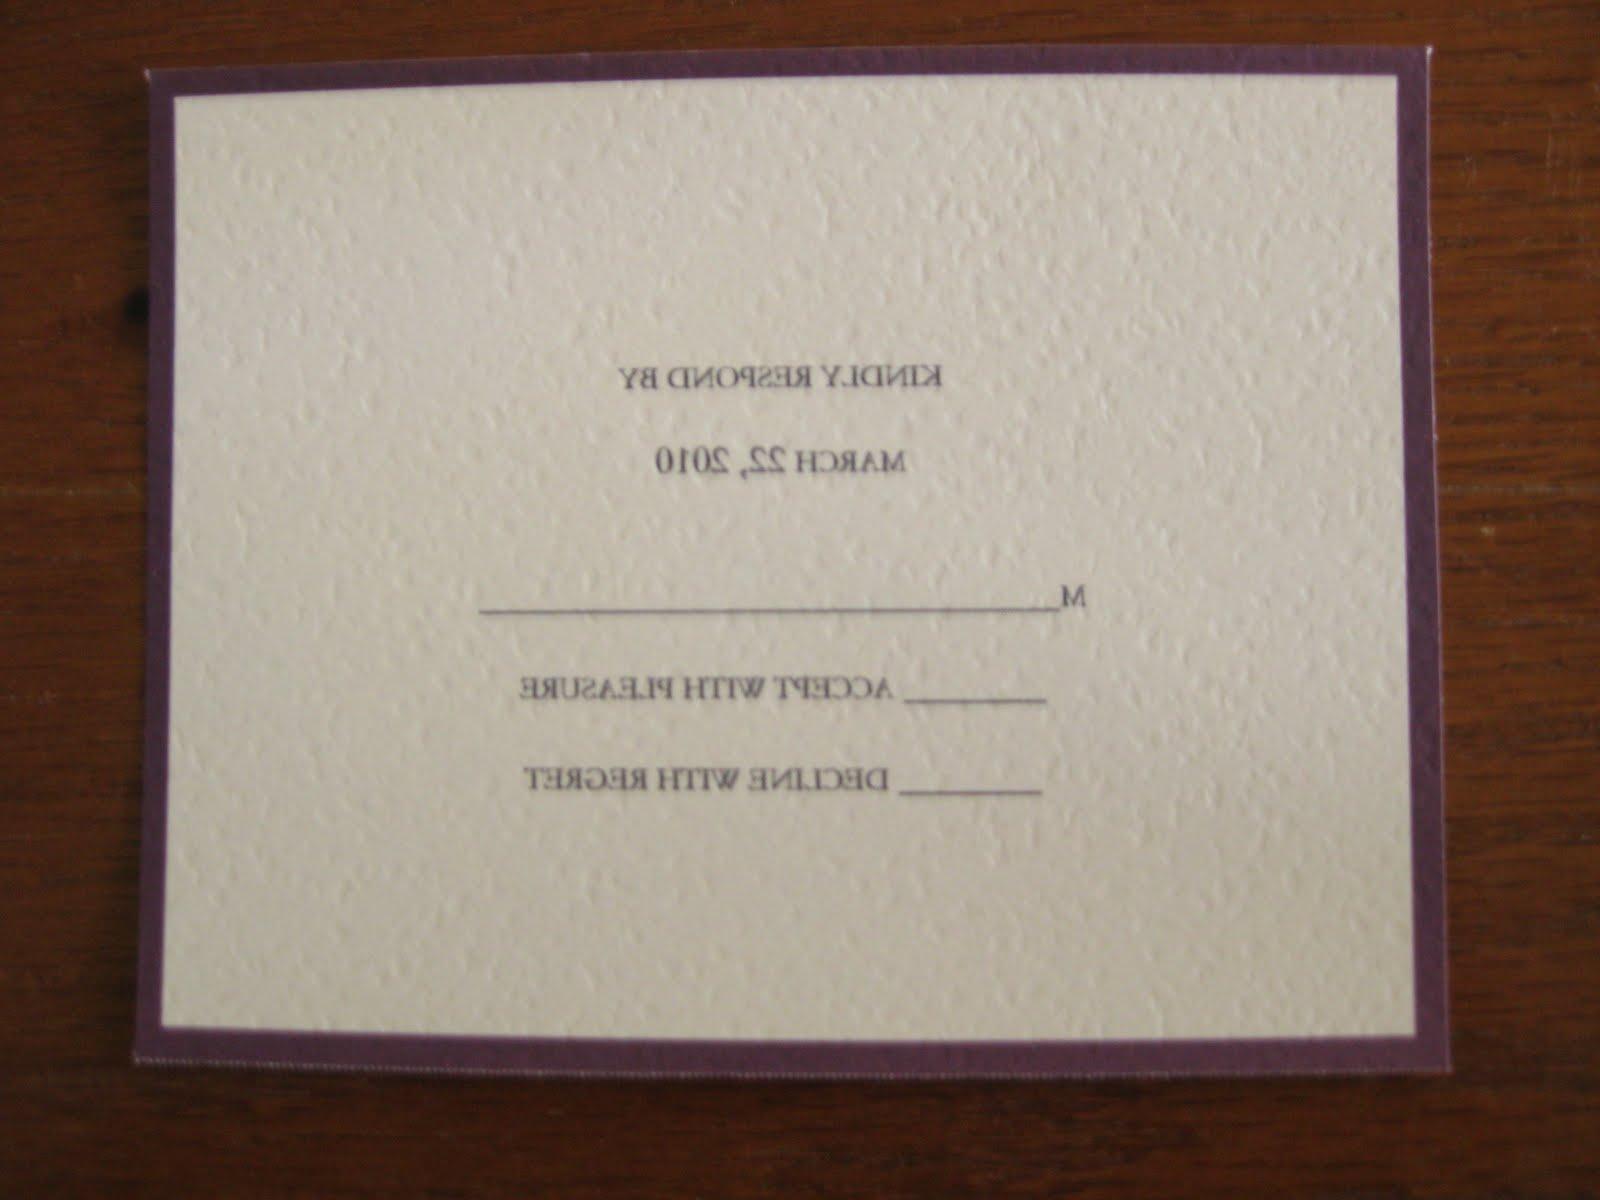 The Wedding Invitation RSVPs